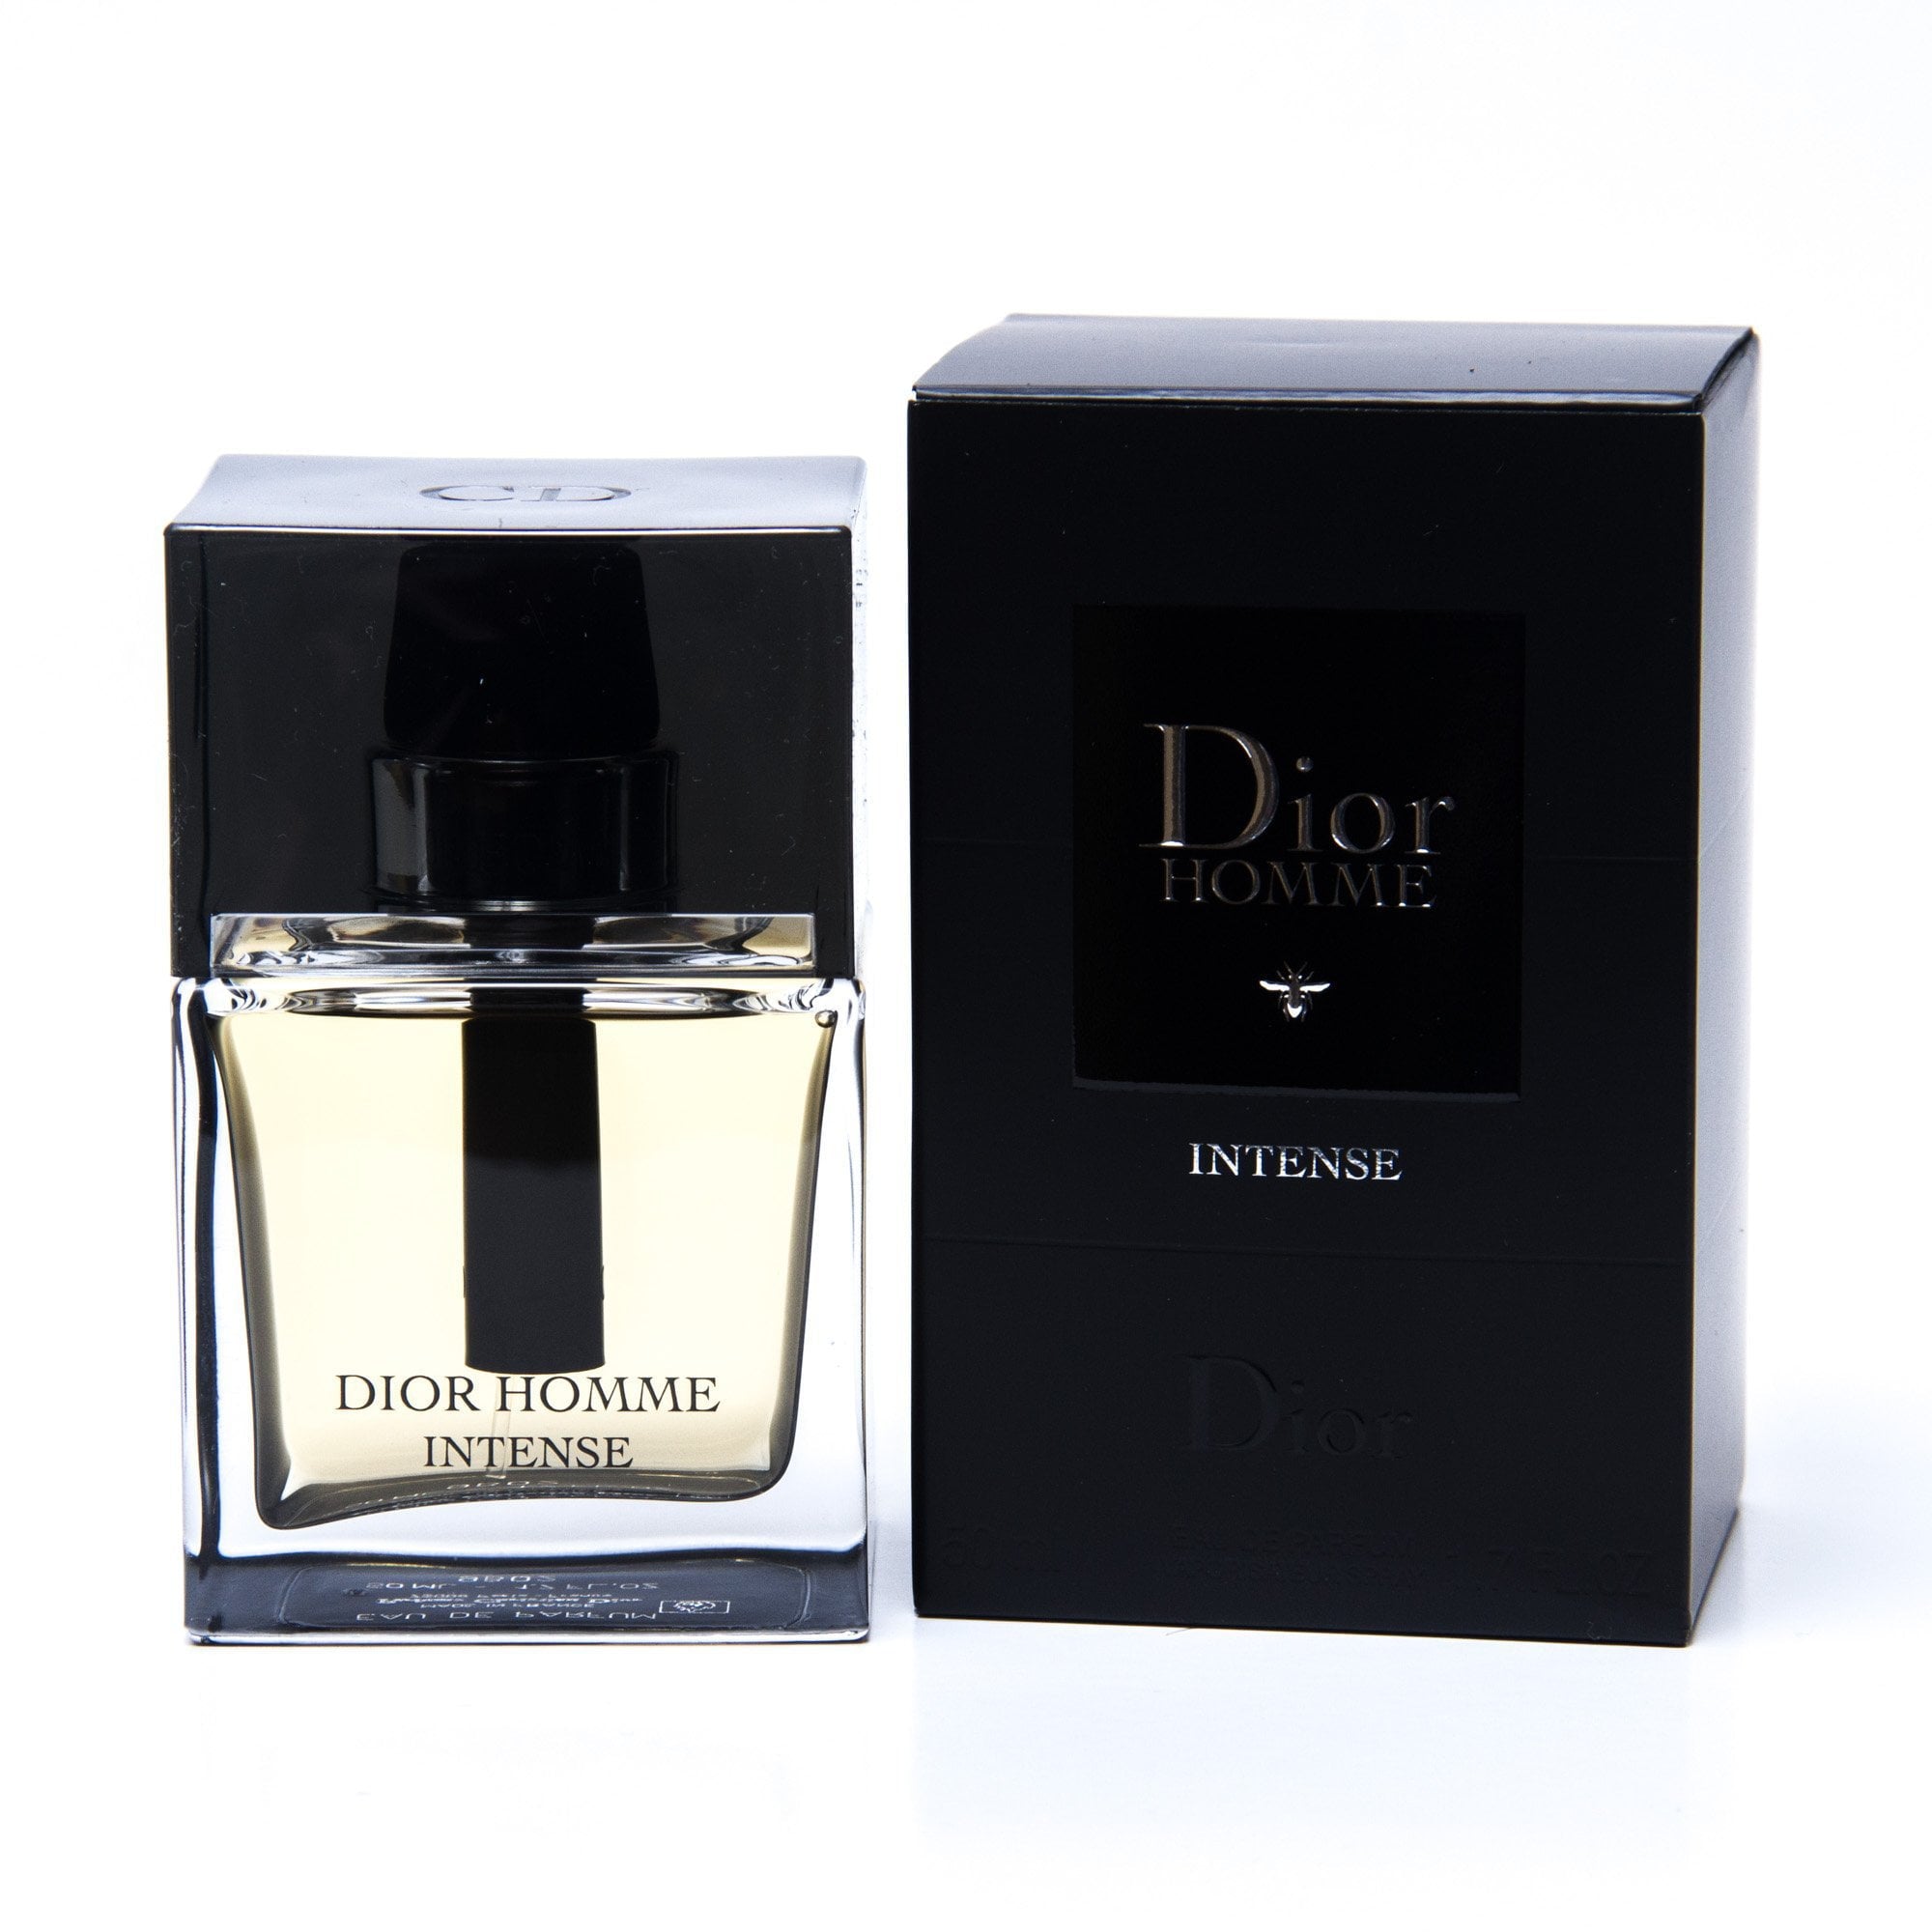 Dior Homme Intense By Christian Dior Inspired 1.7 Oz Eau De Parfum